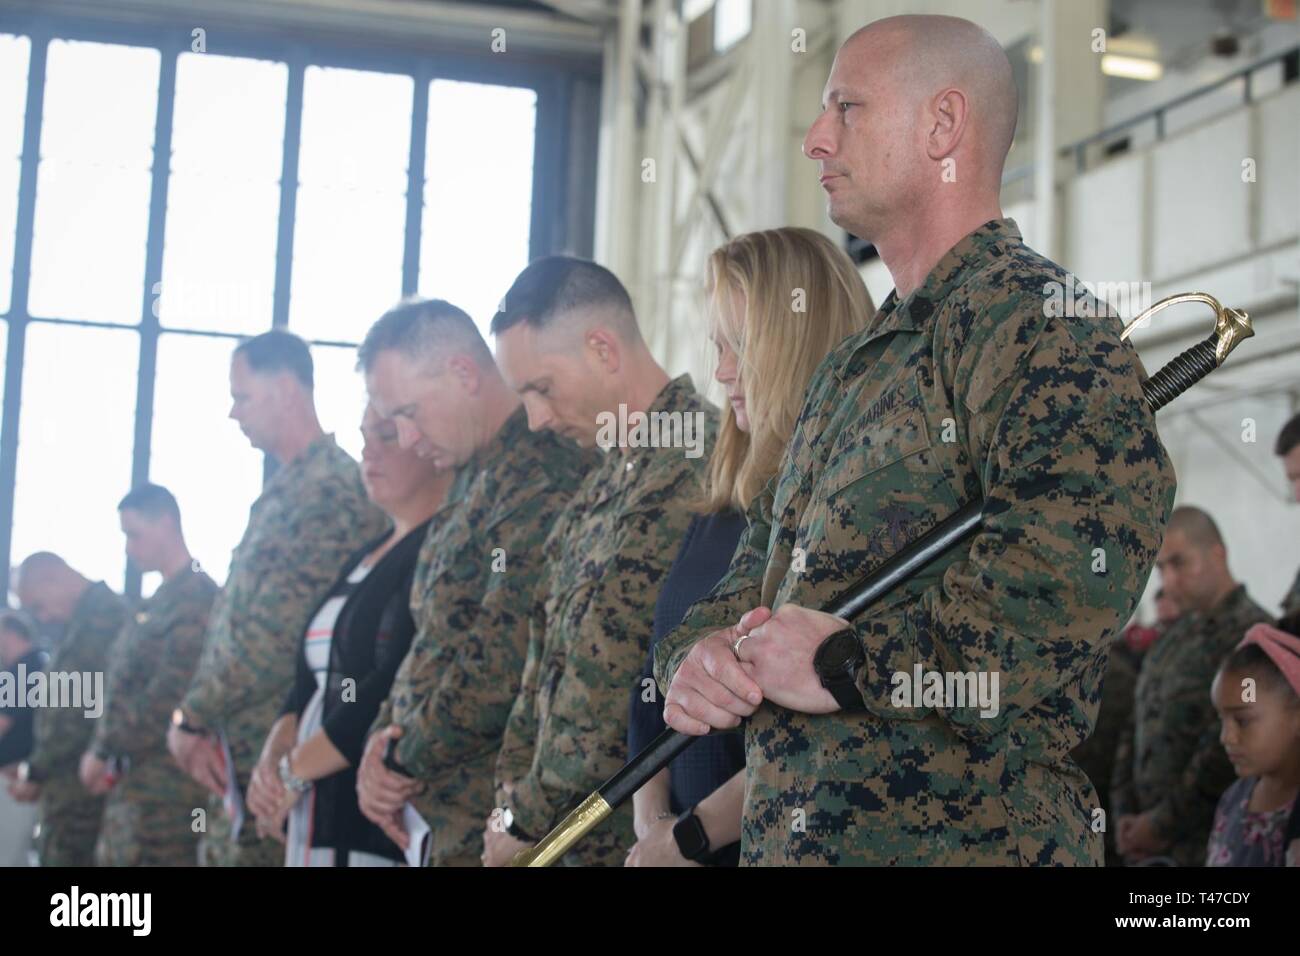 Best of luck to SgtMaj Ruiz. #marines #marinecorps #military #news #fy